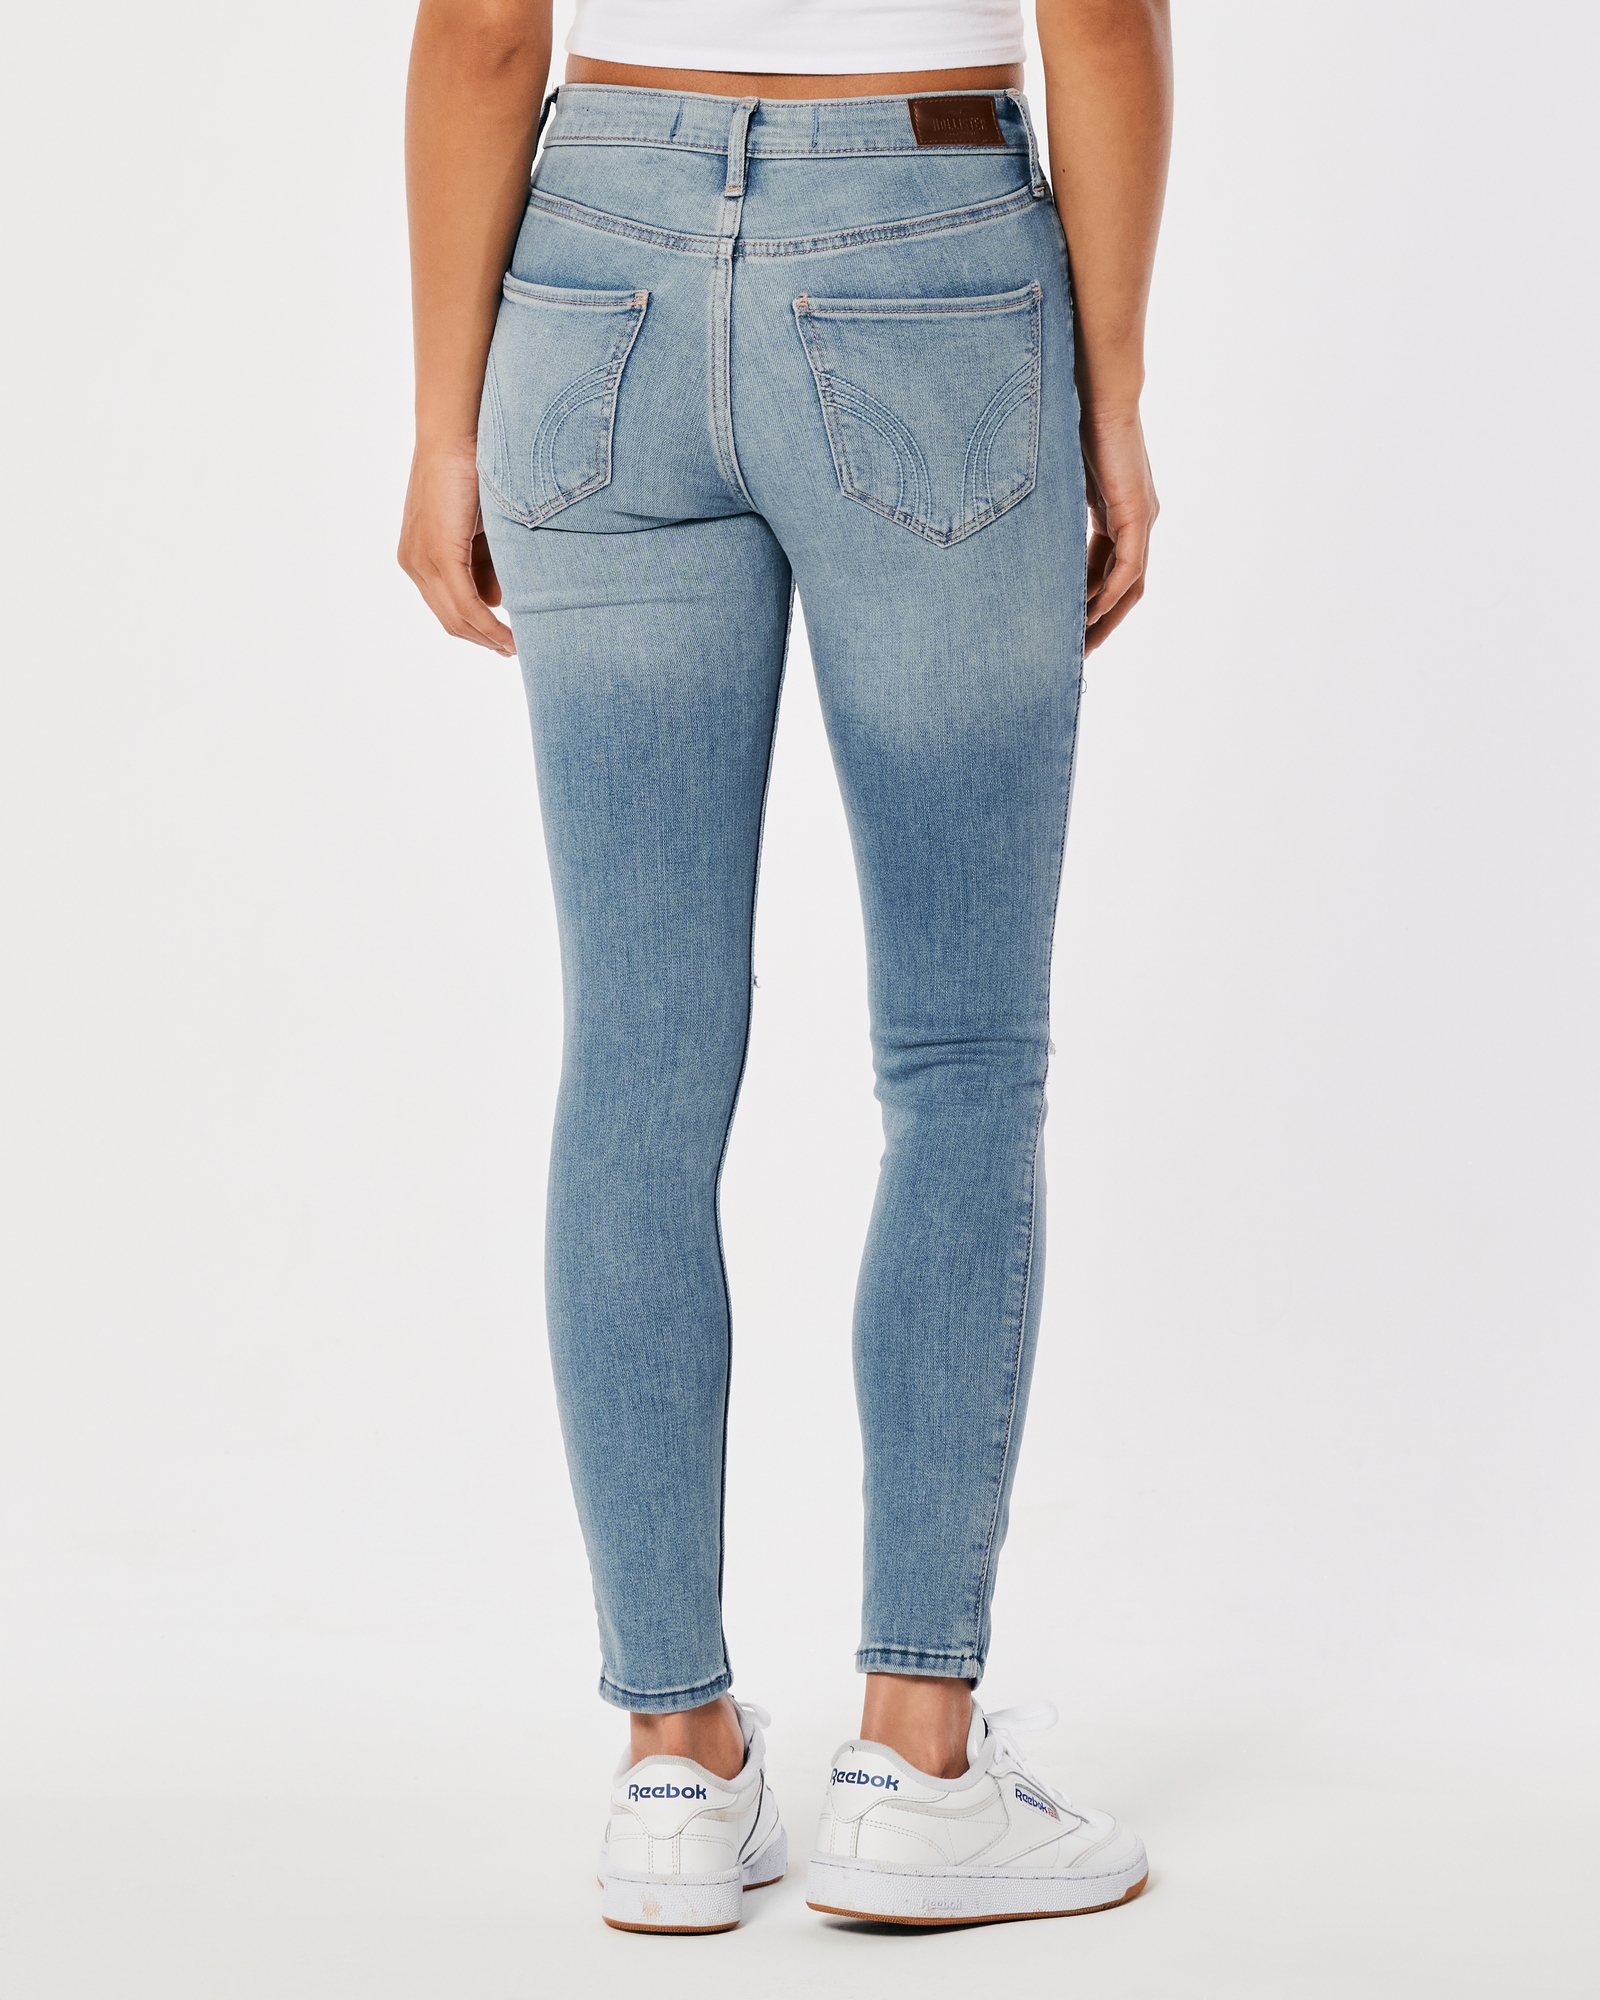 Ex UK Brand High Waisted Skinny Jeans Stretchy Denim Womens Ladies